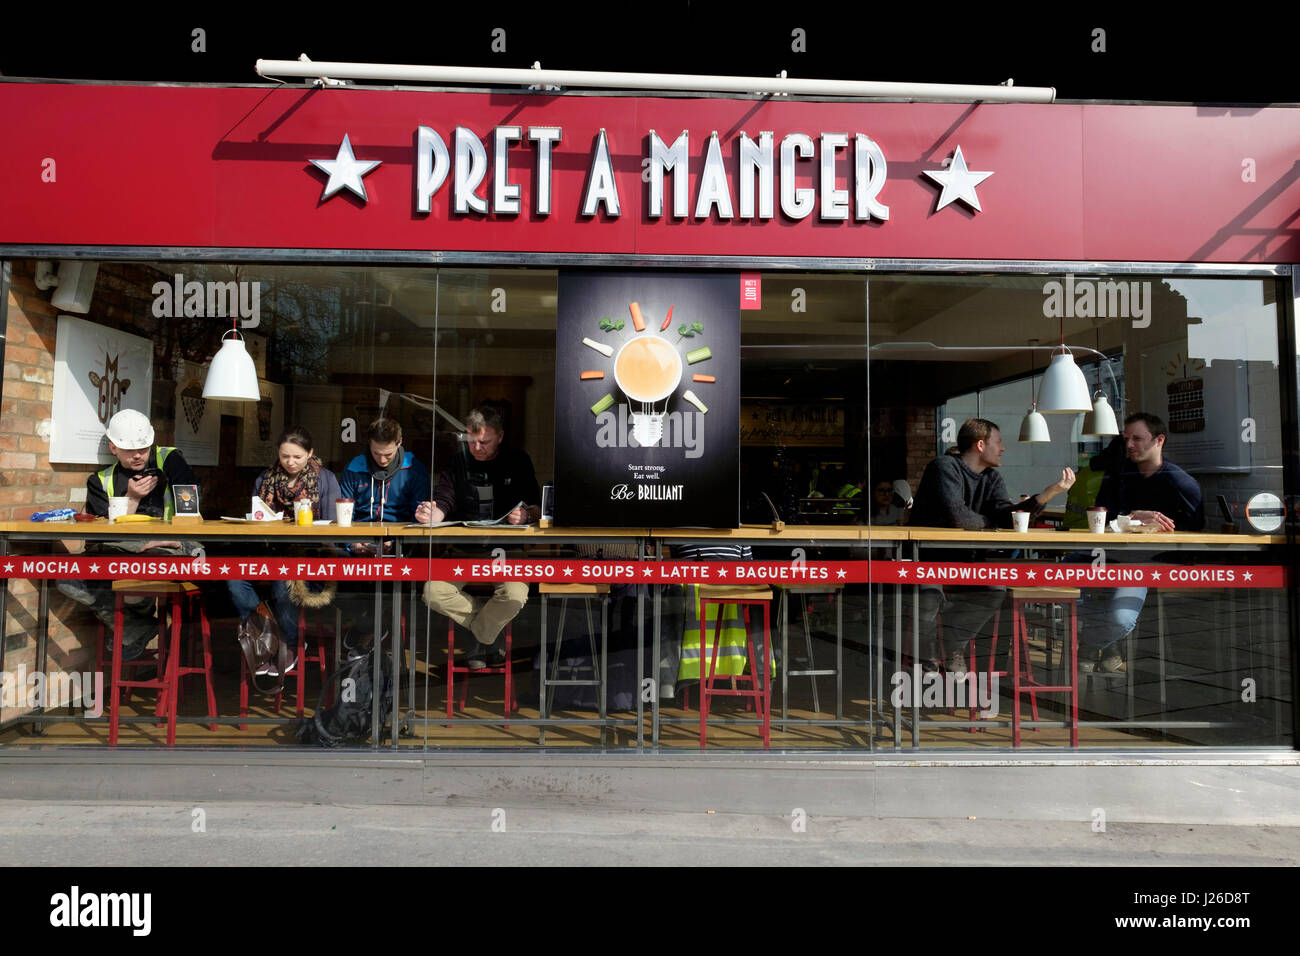 Pret A Manger fast food restaurant shopfront in London, England, UK, Europe Stock Photo